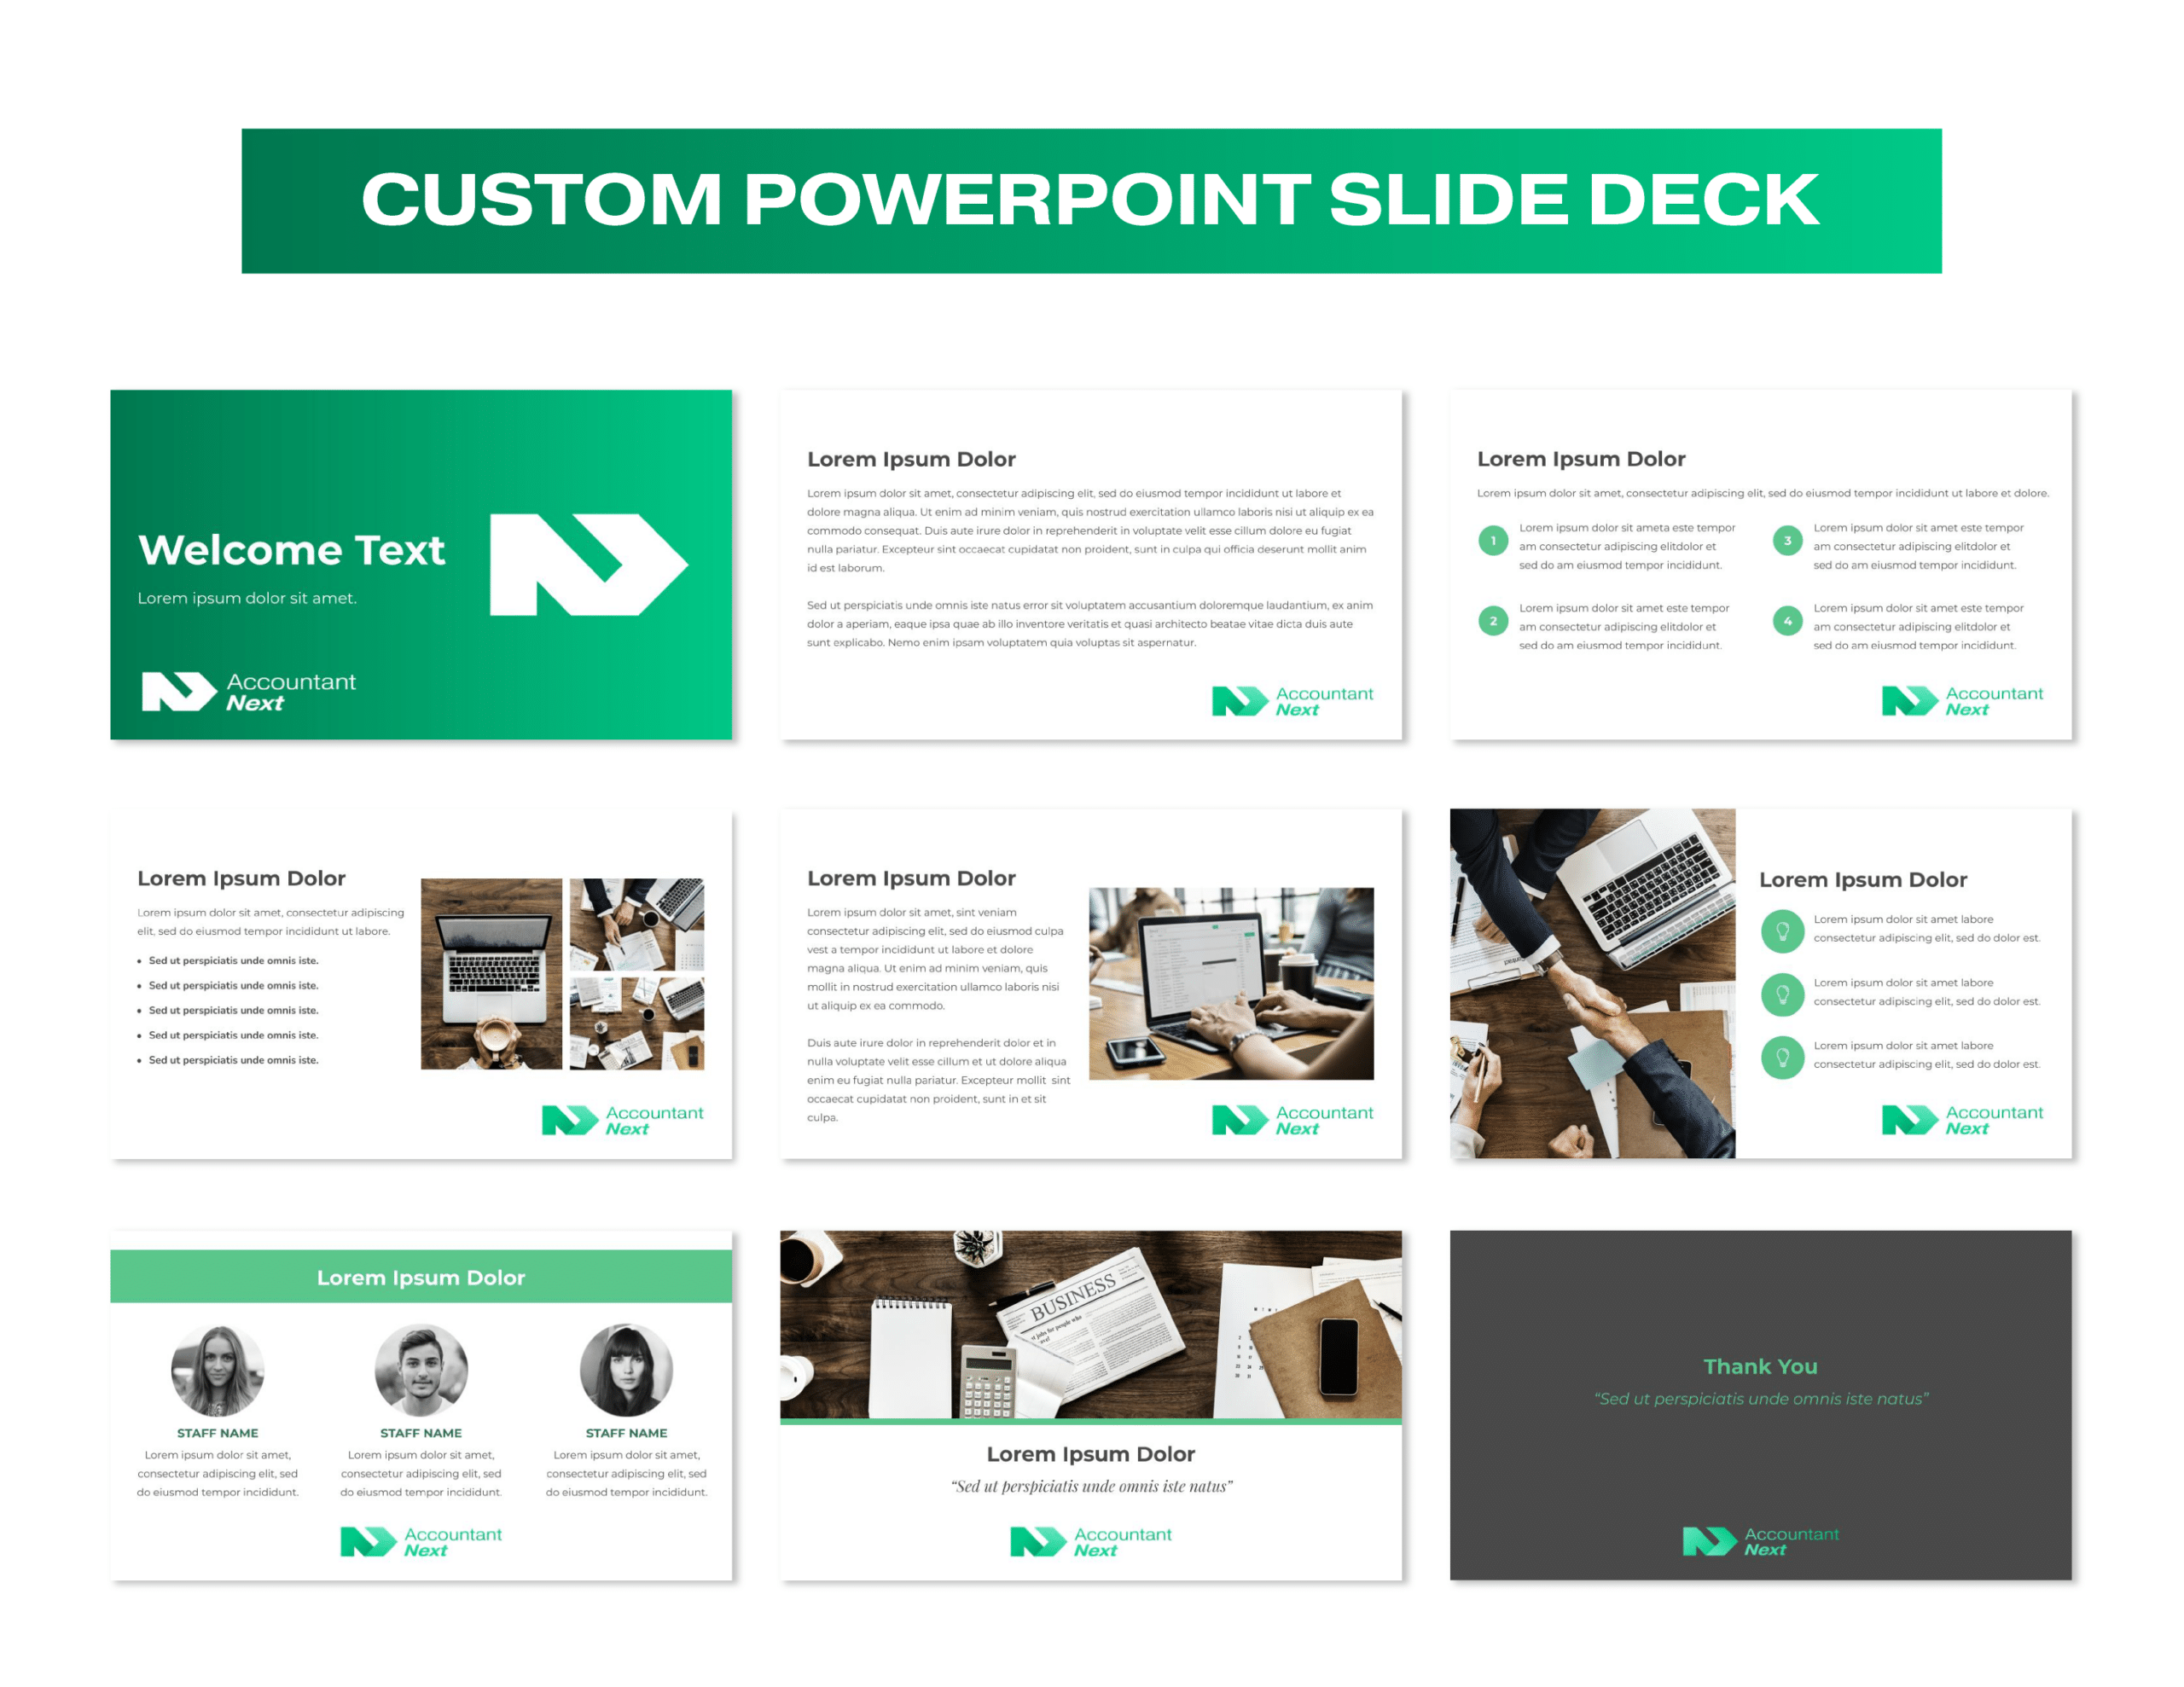 05AccountantNext_Showcase_Custom PowerPoint Slide Deck